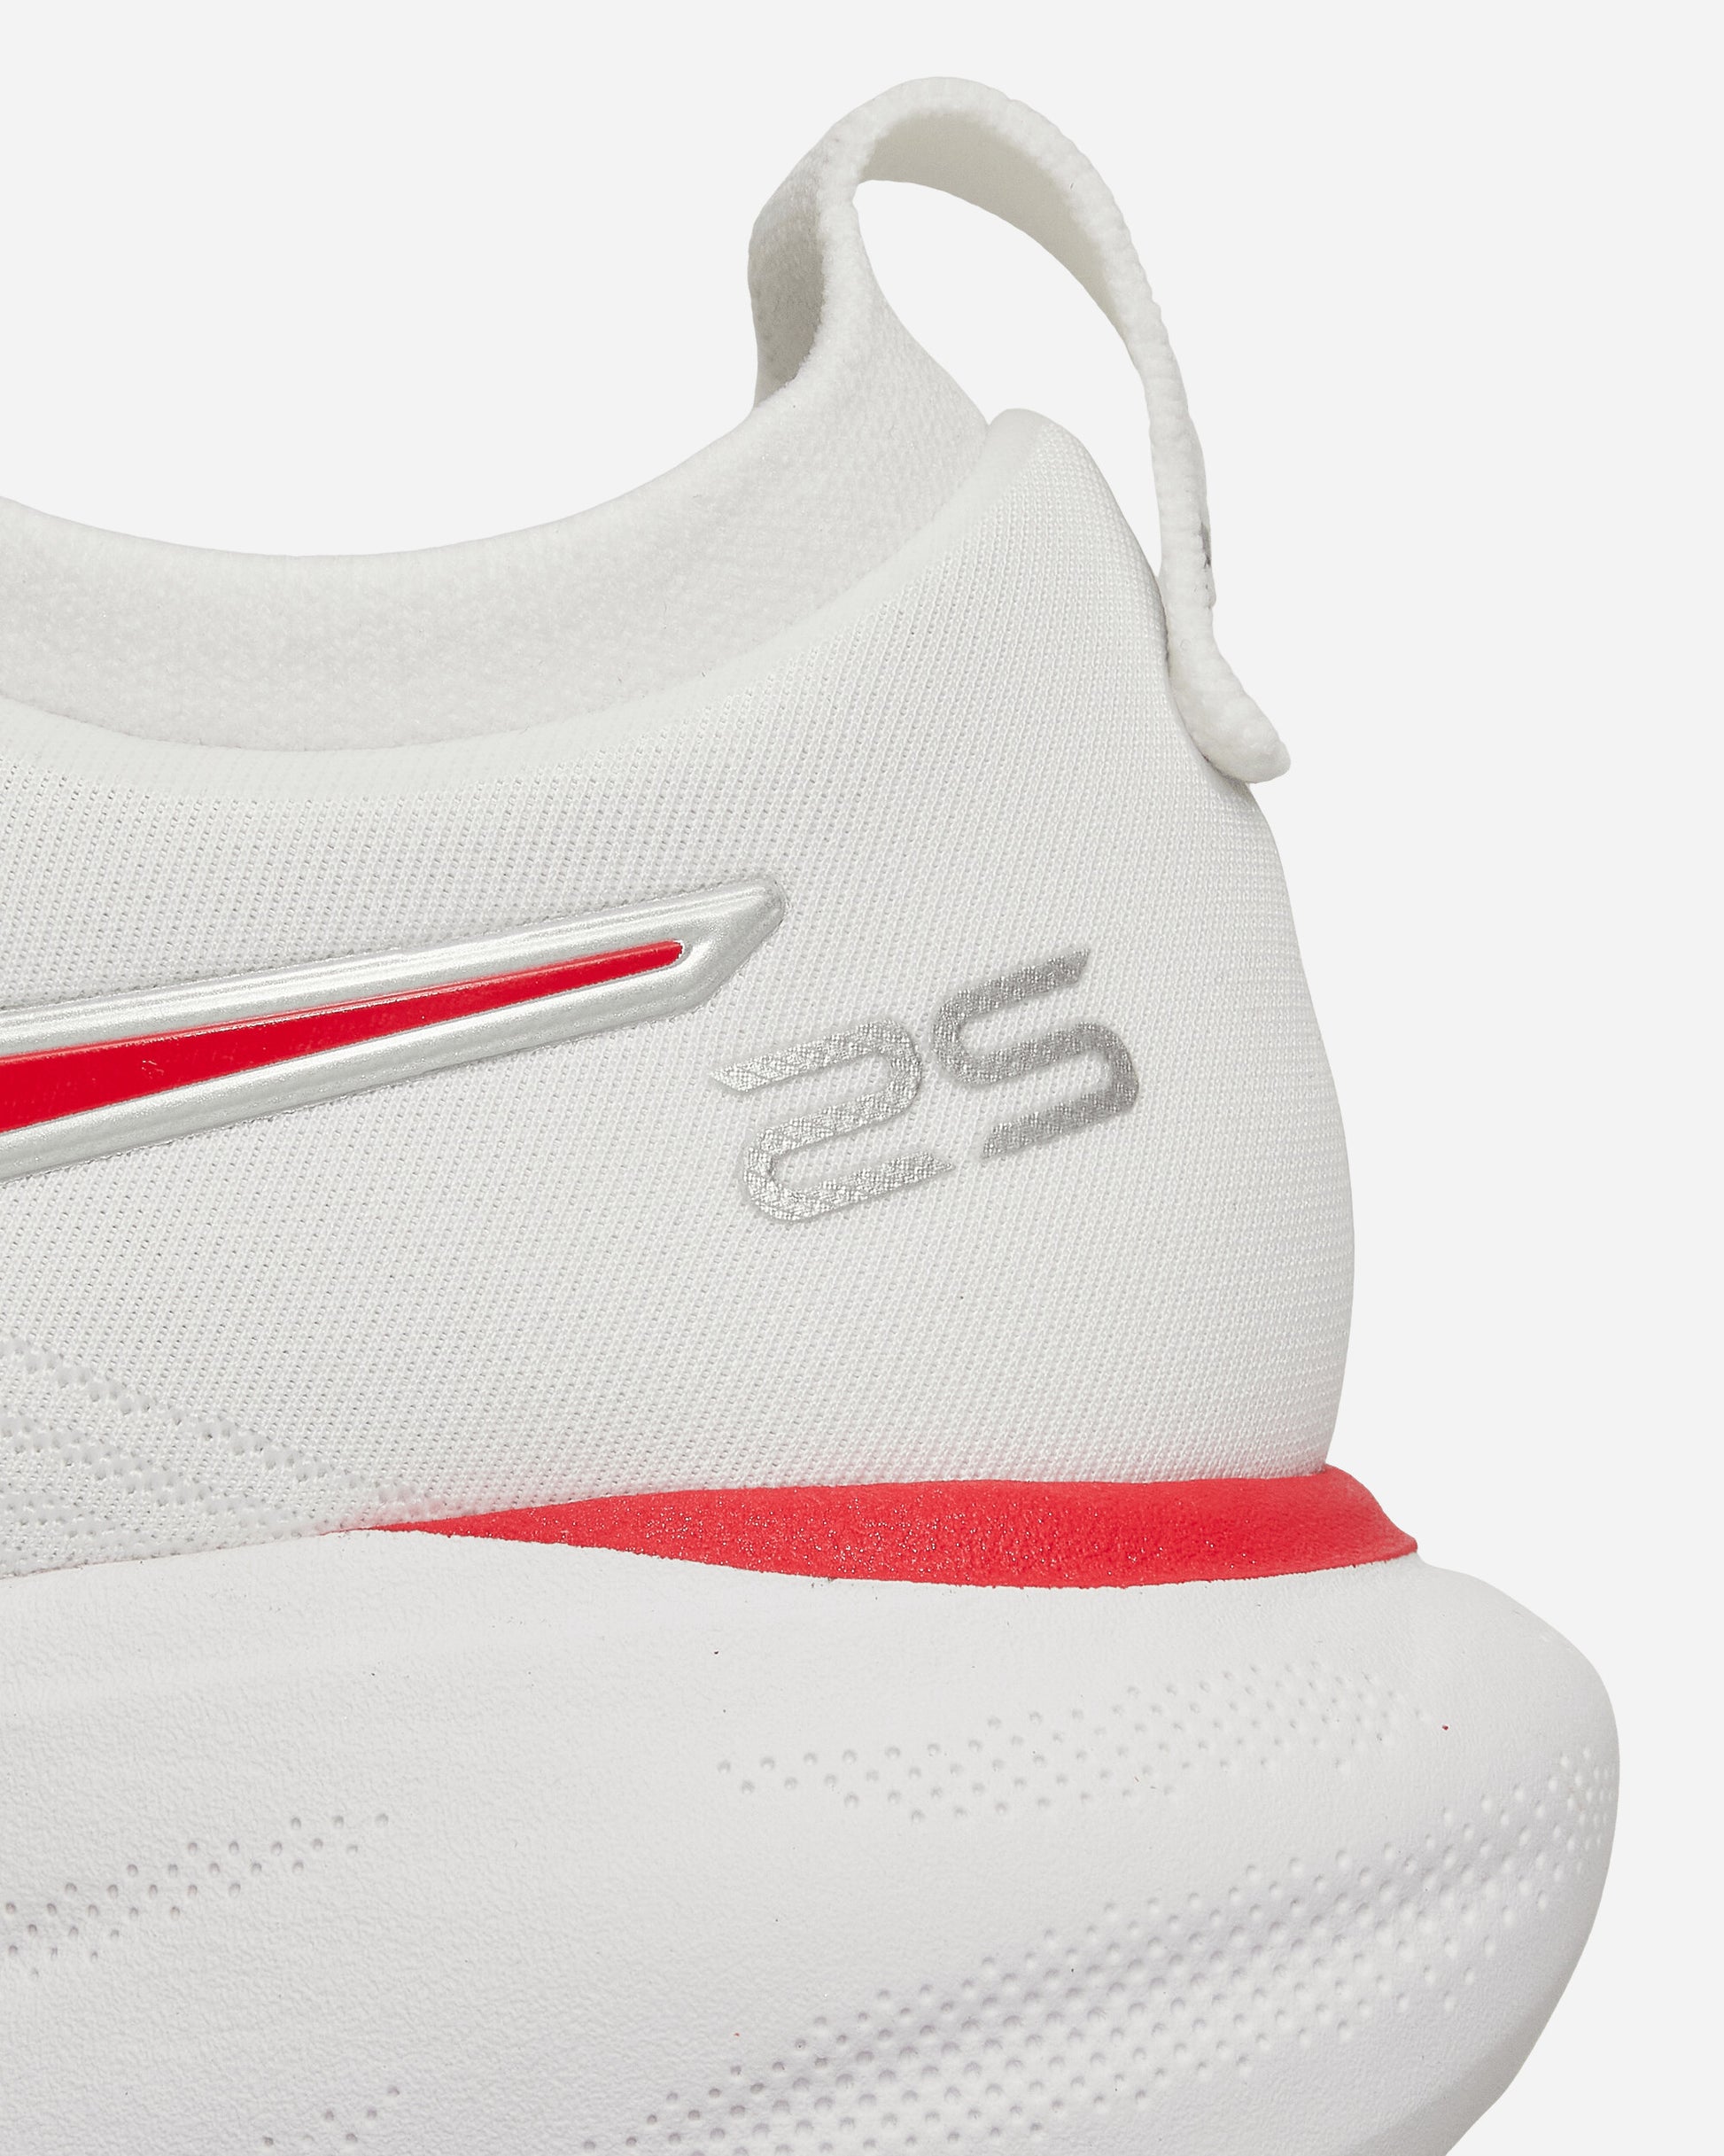 Asics Gel-Nimbus 25 Anniversary White/Classic Red Sneakers Low 1011B750-100